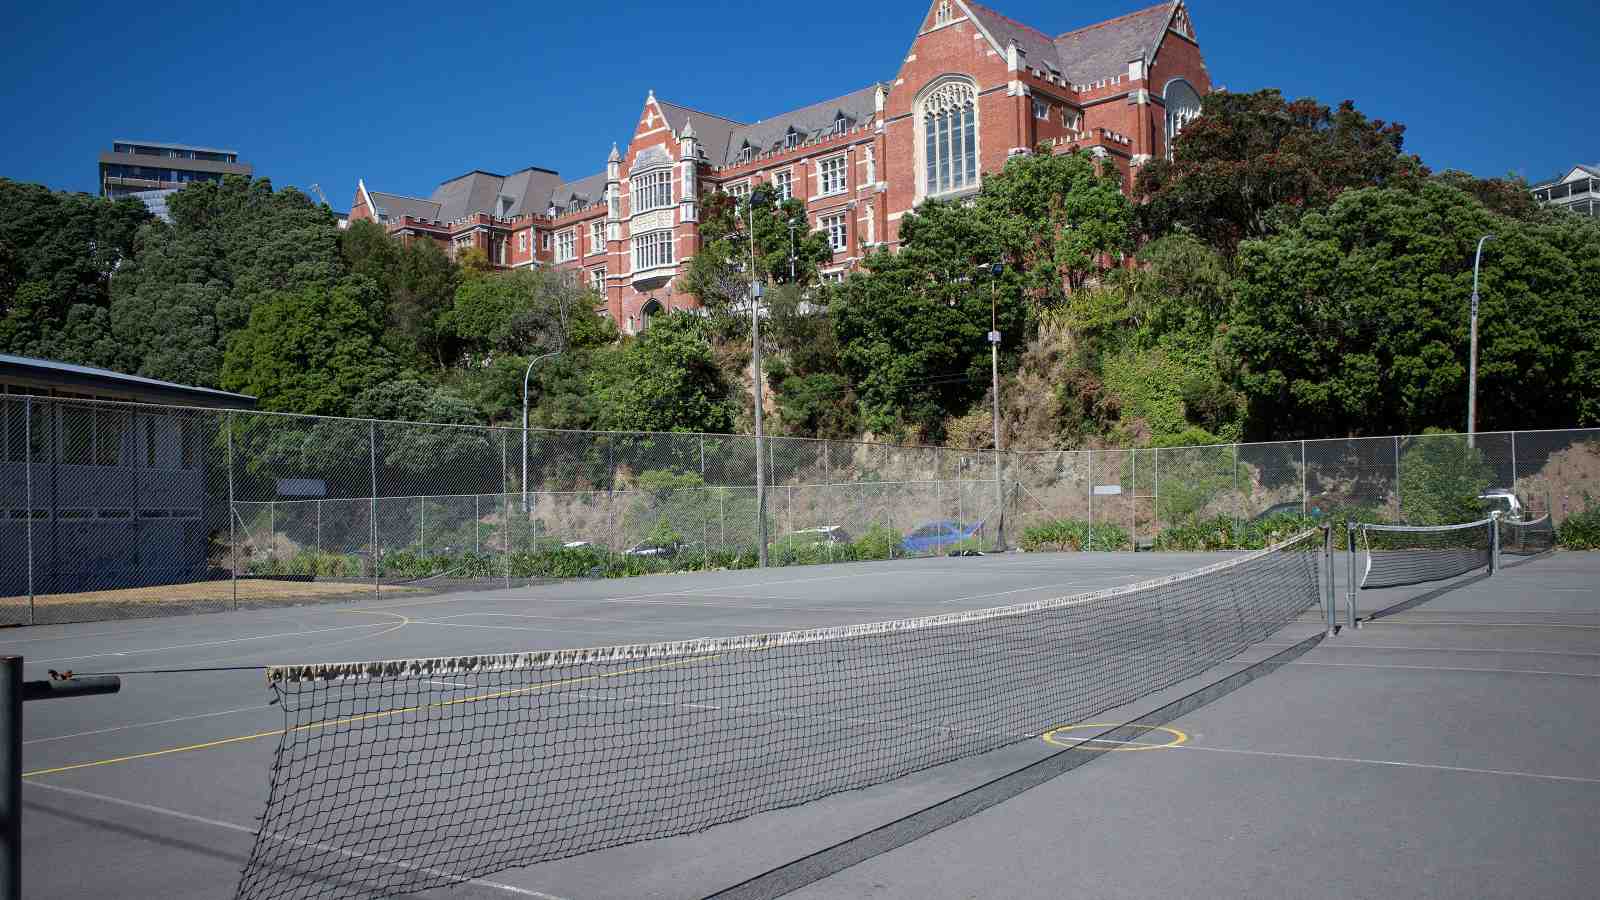 Tennis courts on Salmanca road